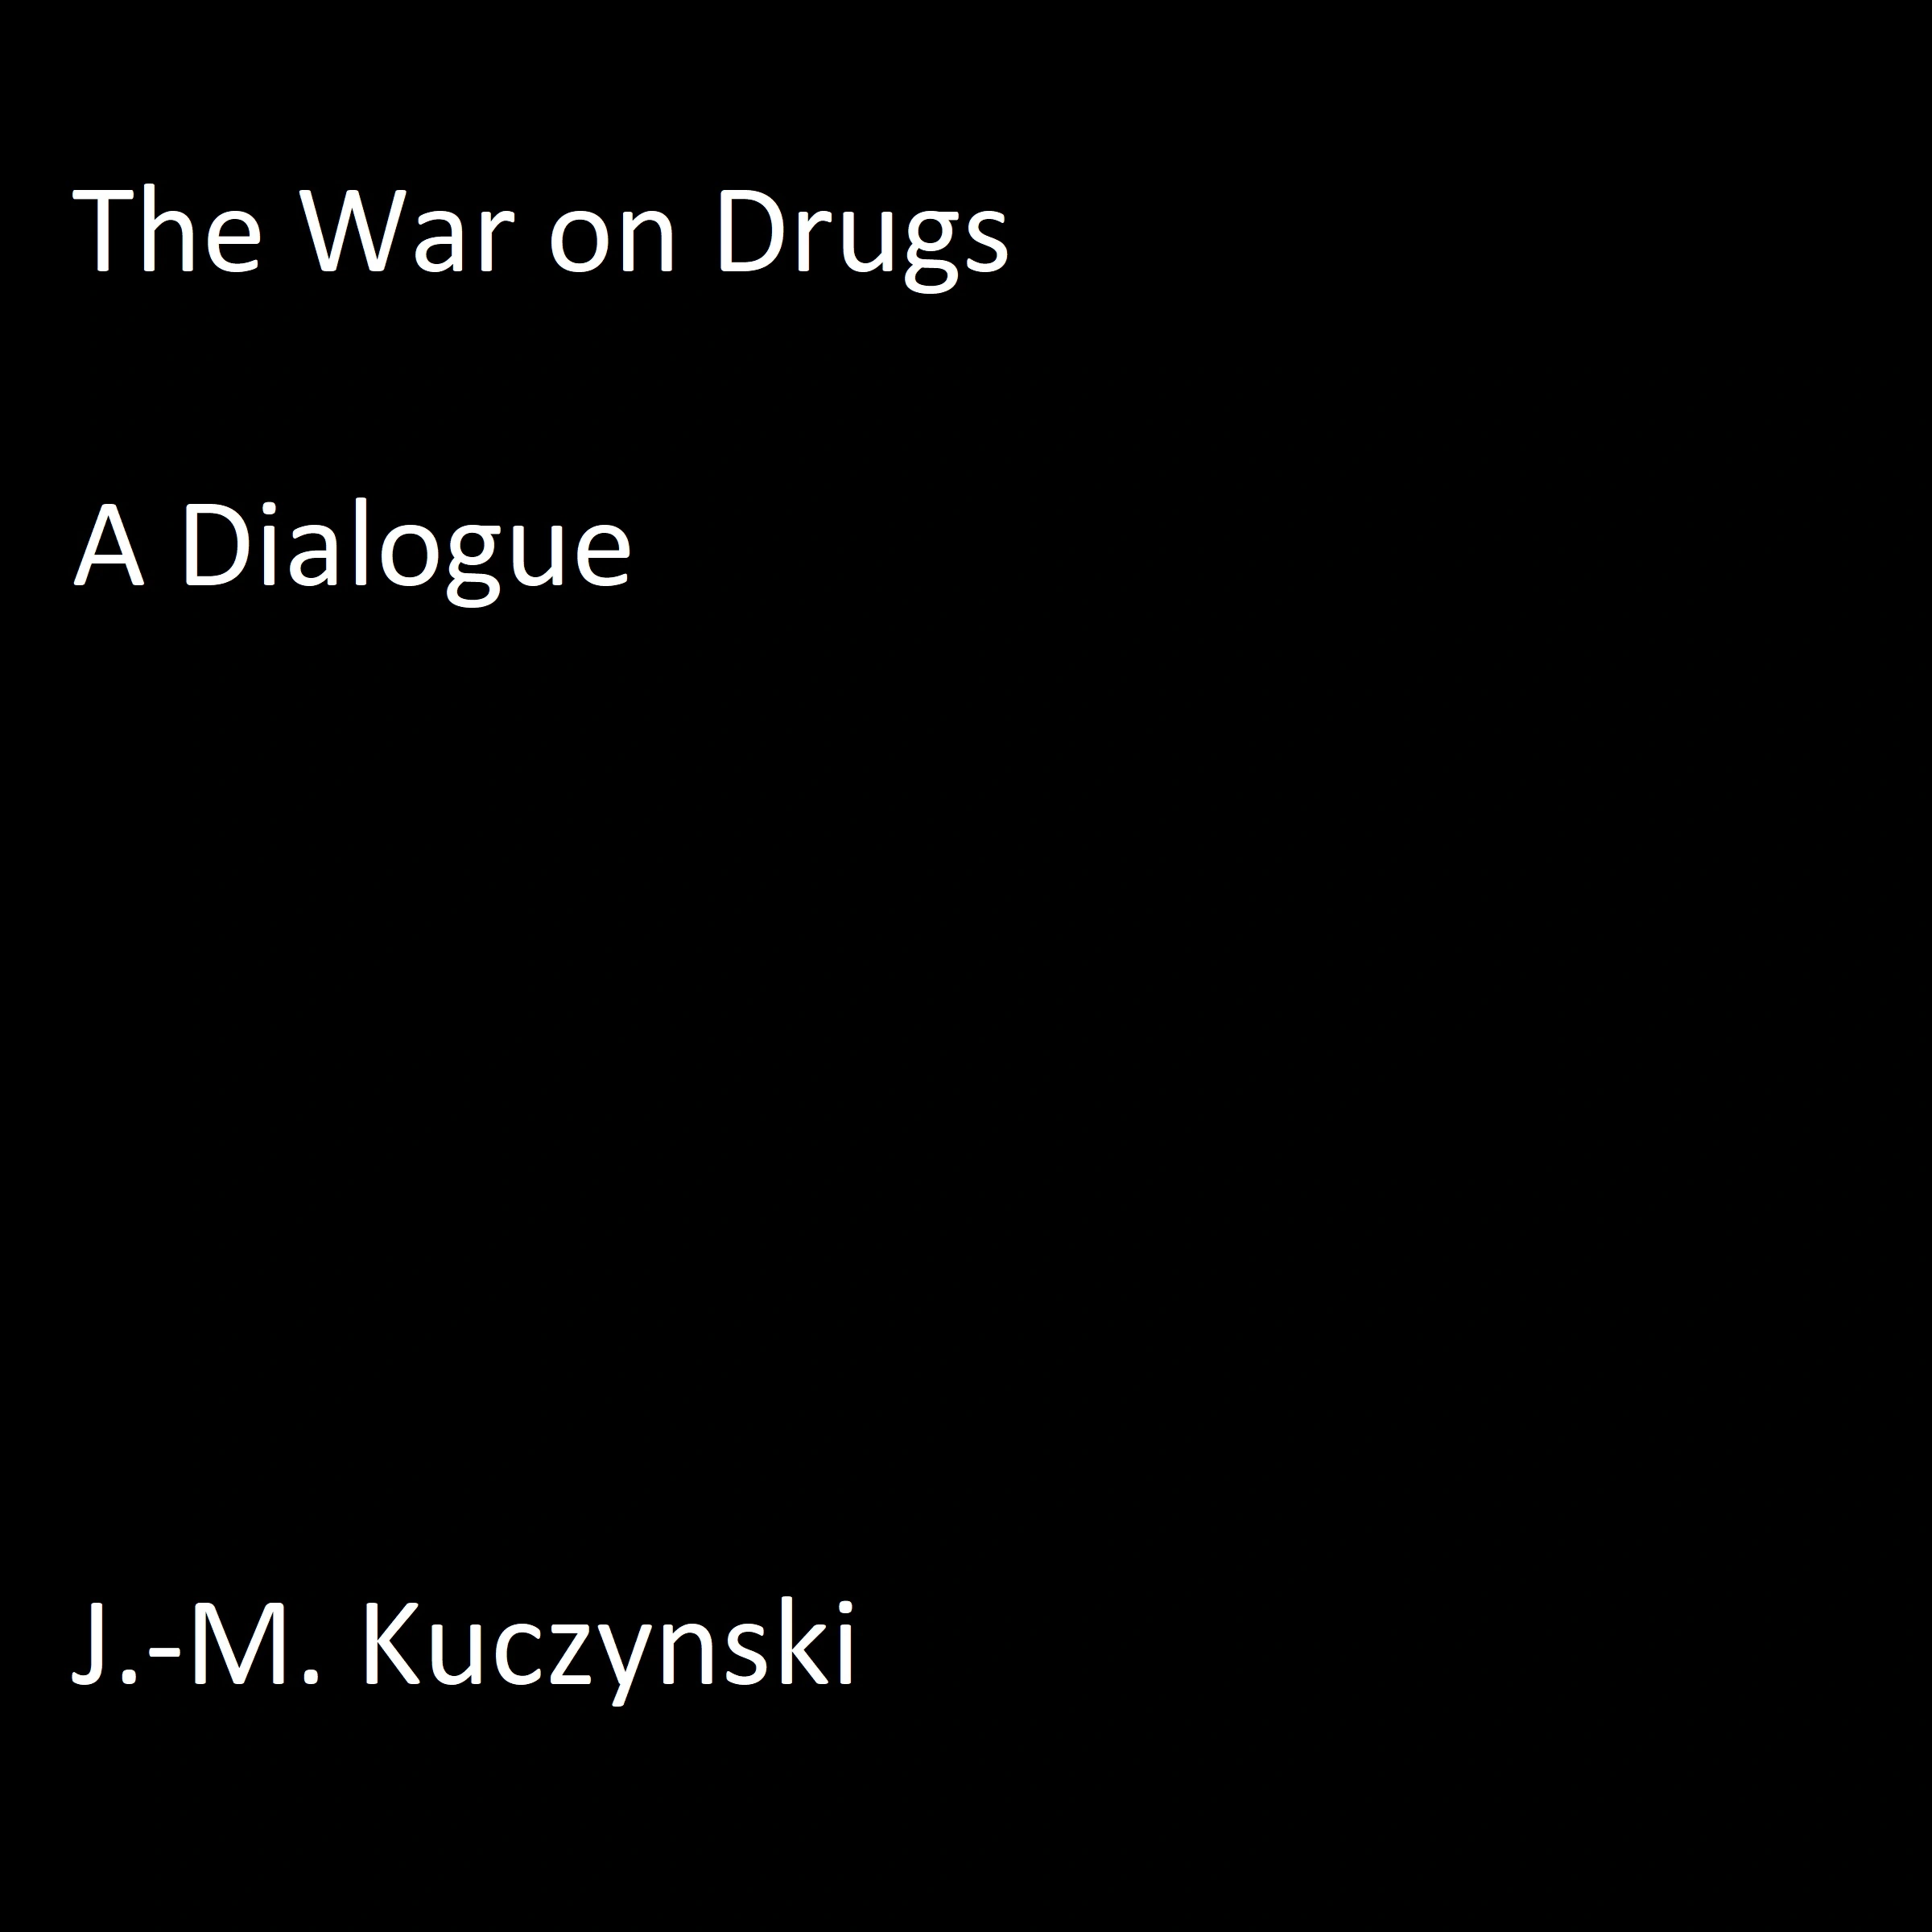 The War on Drugs Audiobook by J.-M. Kuczynski